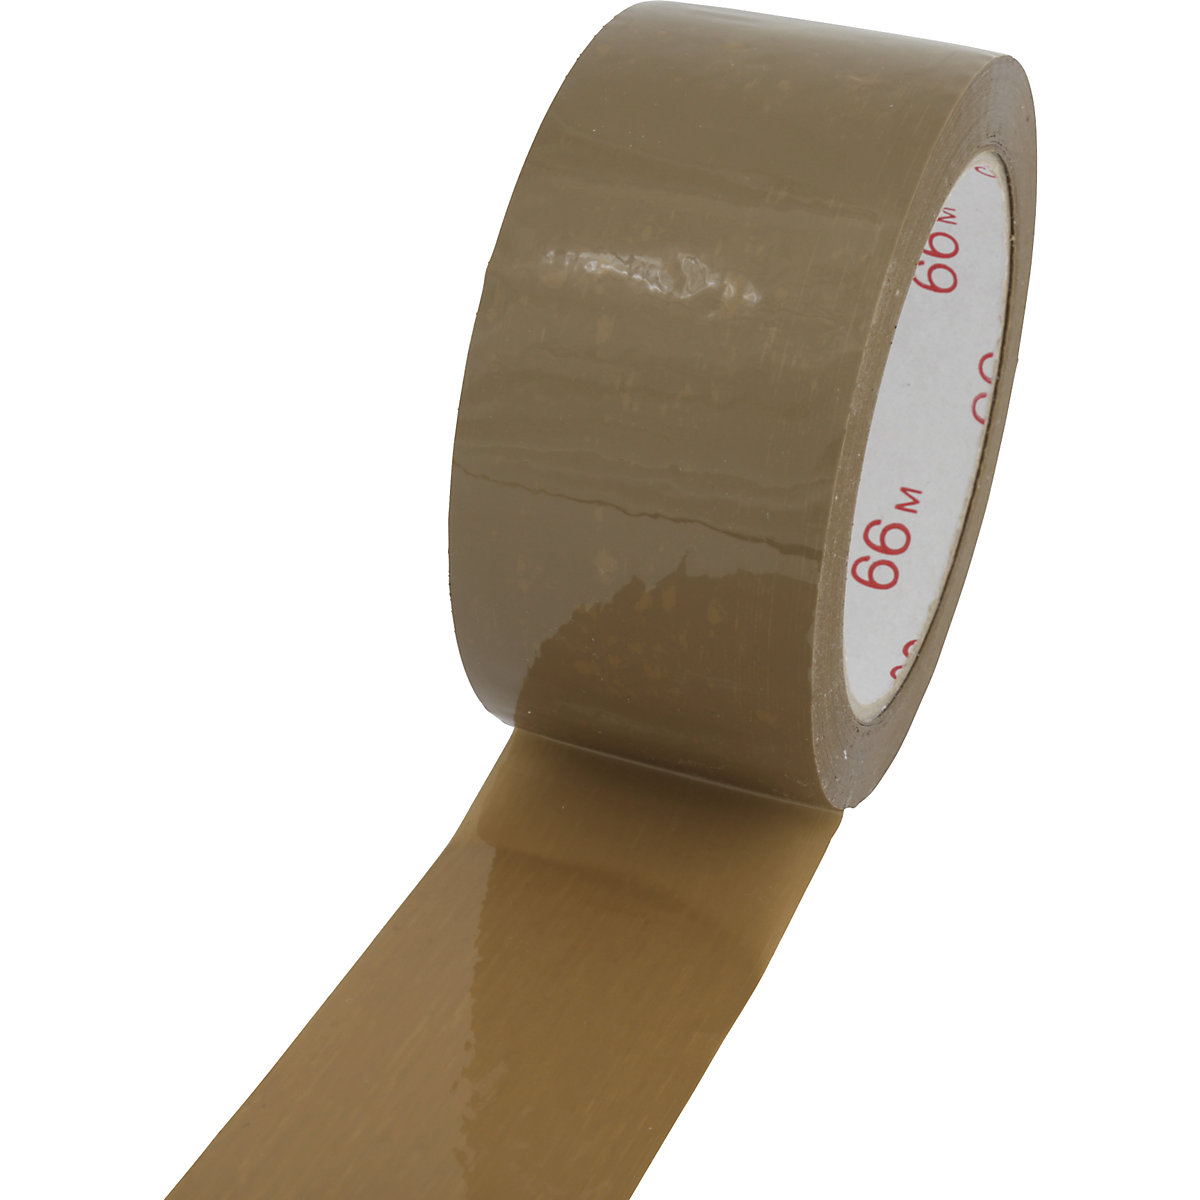 Scotch® Heavy Duty Shipping Packaging Tape, 142-6-ESF, clear, 1.88 in x  22.2 yd (48 mm x 20.3 m), 6 rolls per pack